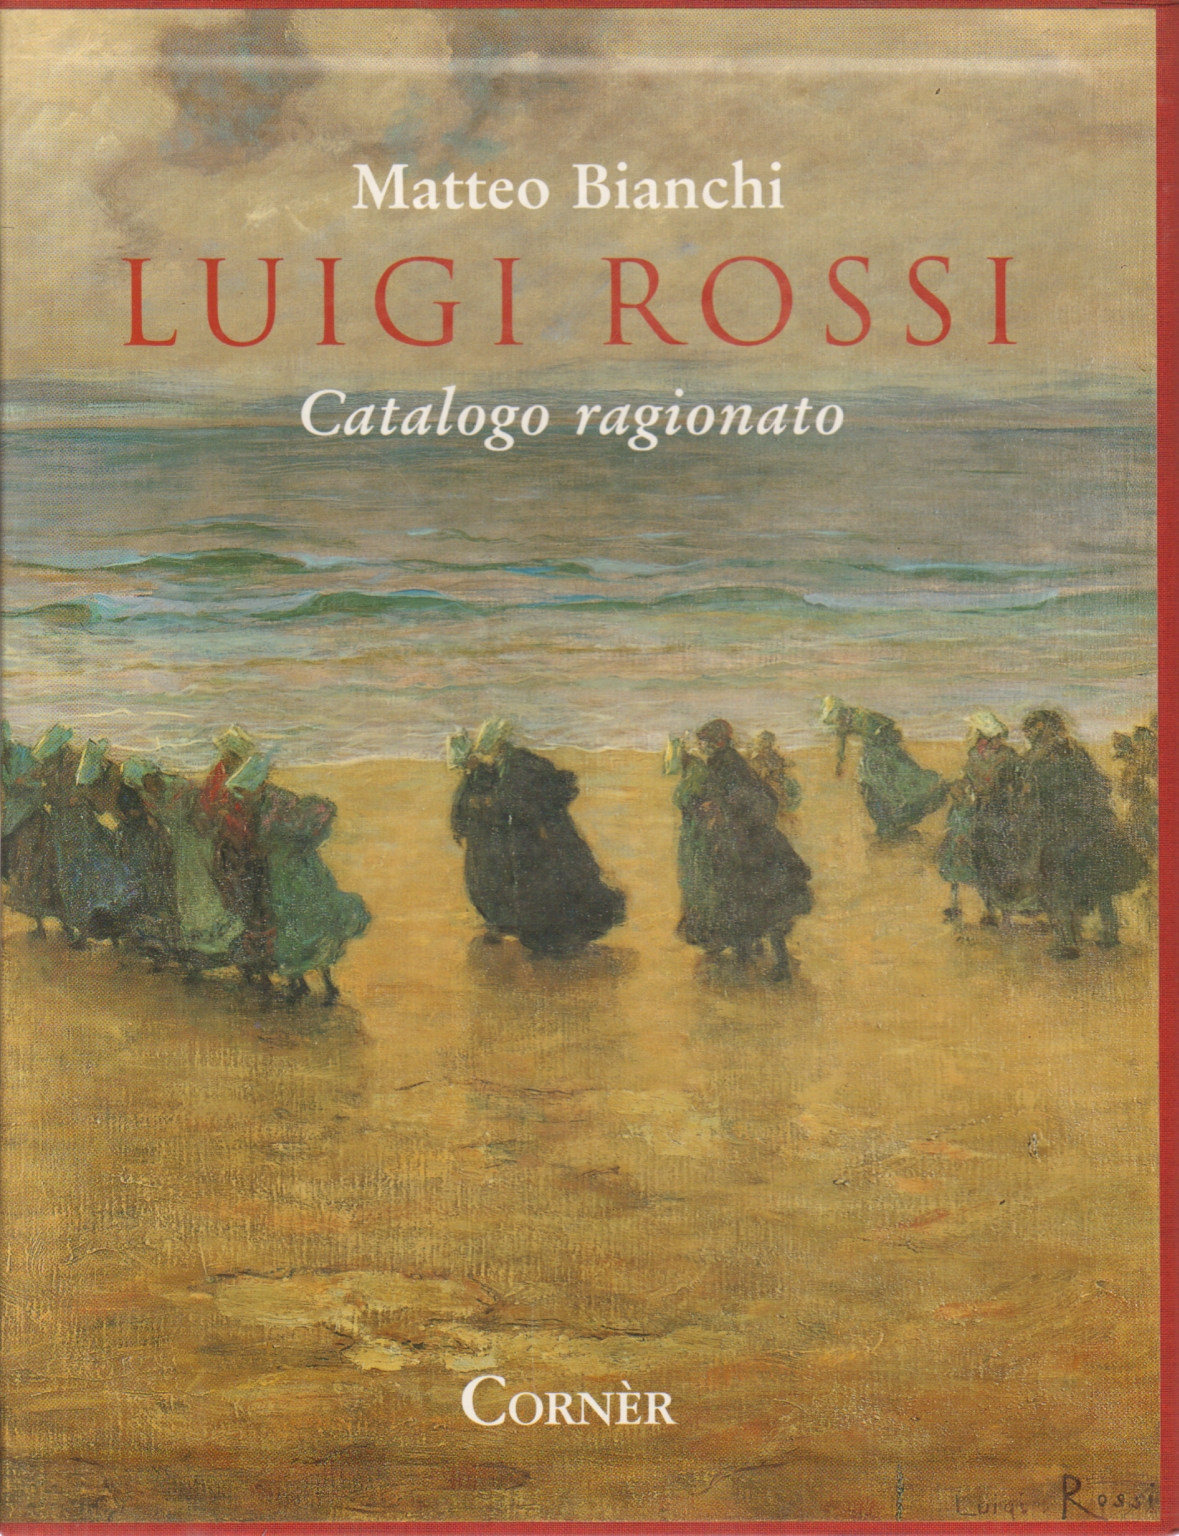 Luigi Rossi, Matteo Bianchi